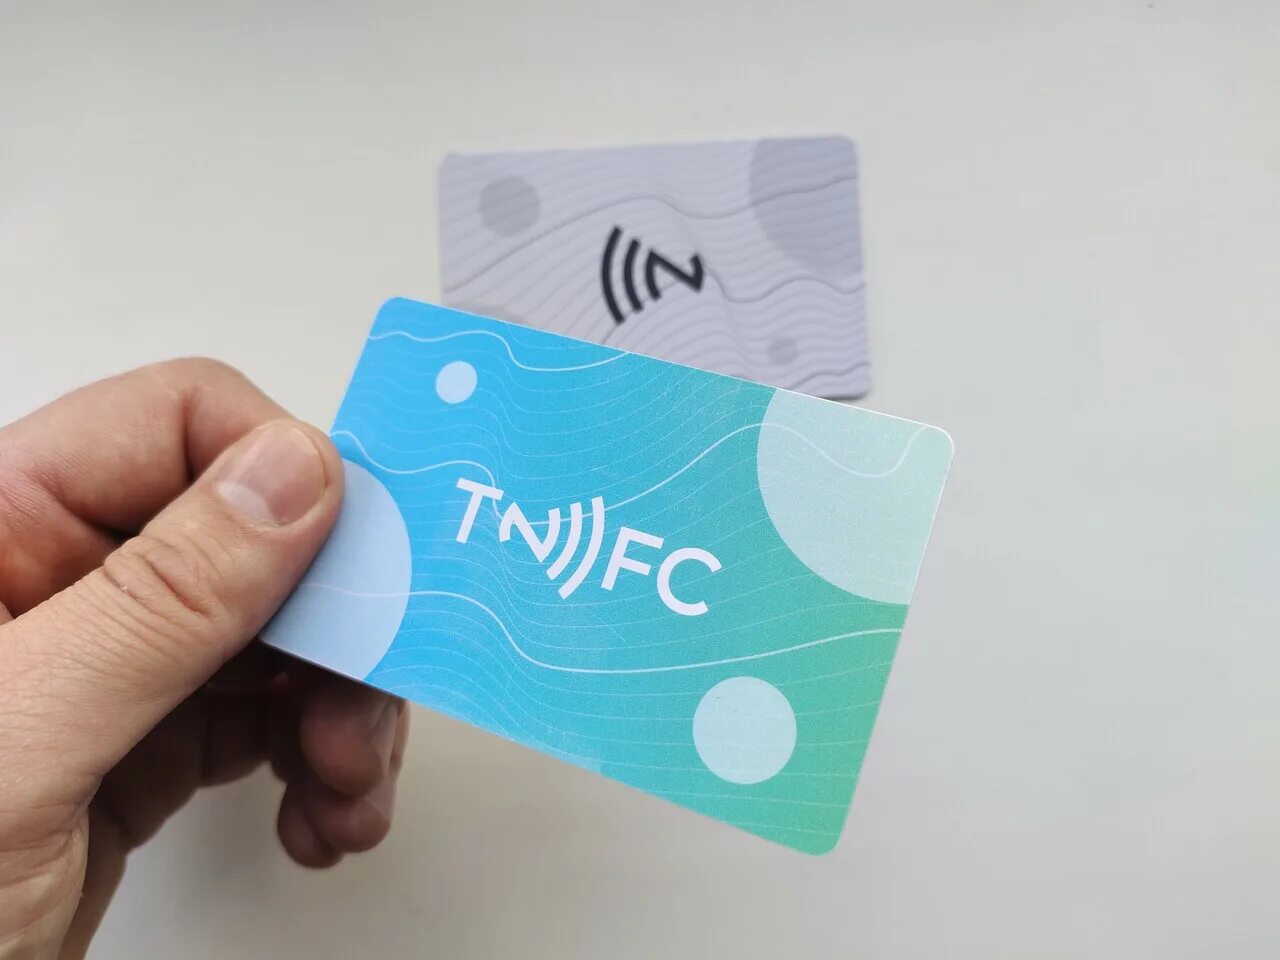 Электронная визитка. NFC визитка. Визитка с NFC чипом. Визитка с NFC меткой. Визитка цифра